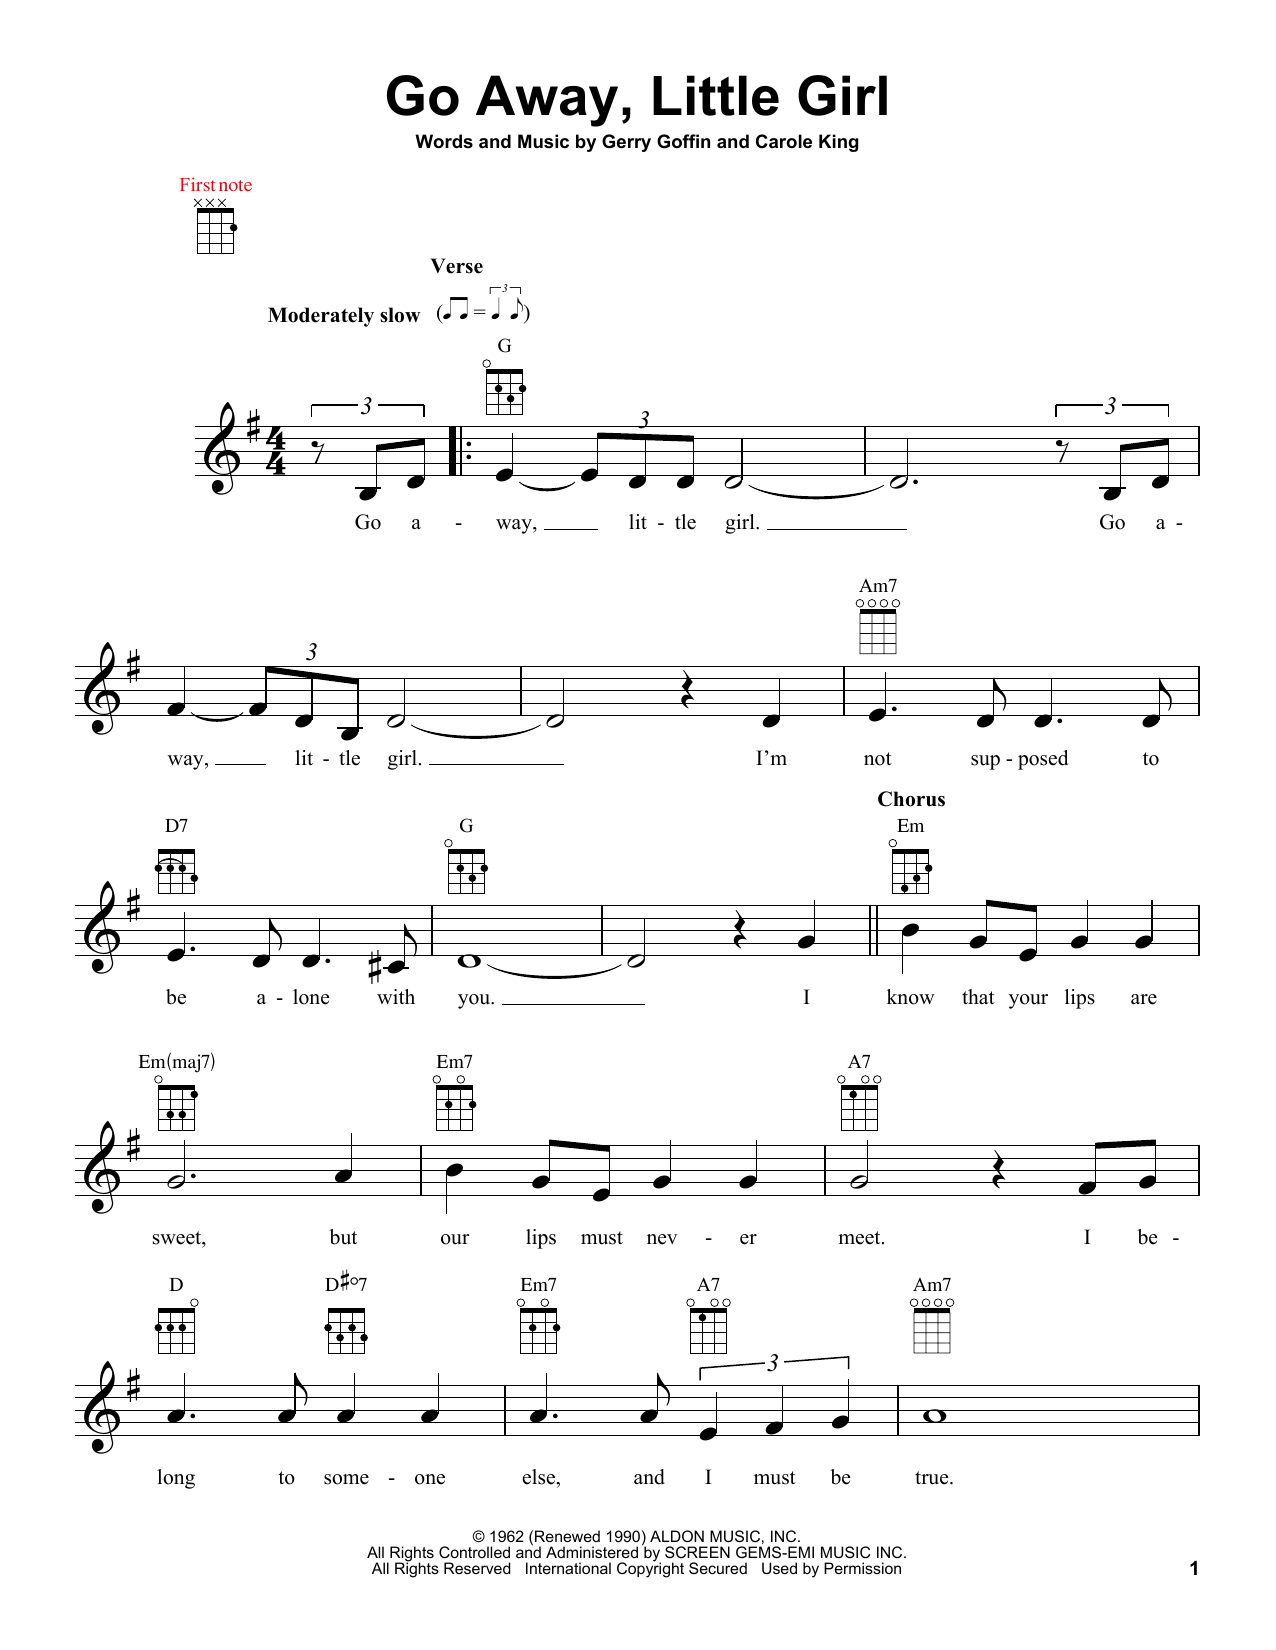 Donny Osmond Go Away, Little Girl Sheet Music Notes & Chords for Violin - Download or Print PDF